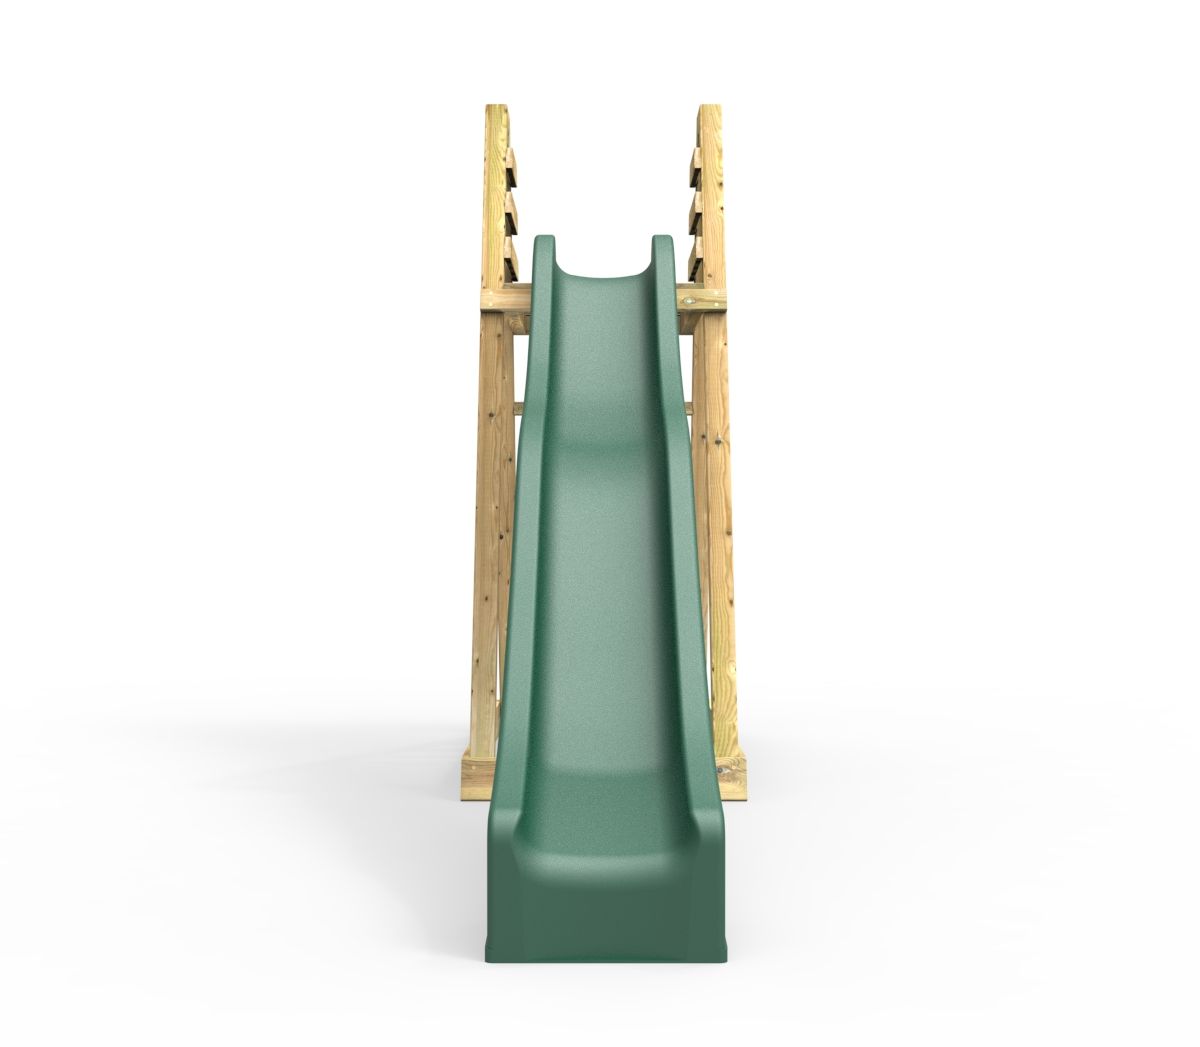 Rebo Wooden Free Standing Slide with 10ft Water Slide - Standard